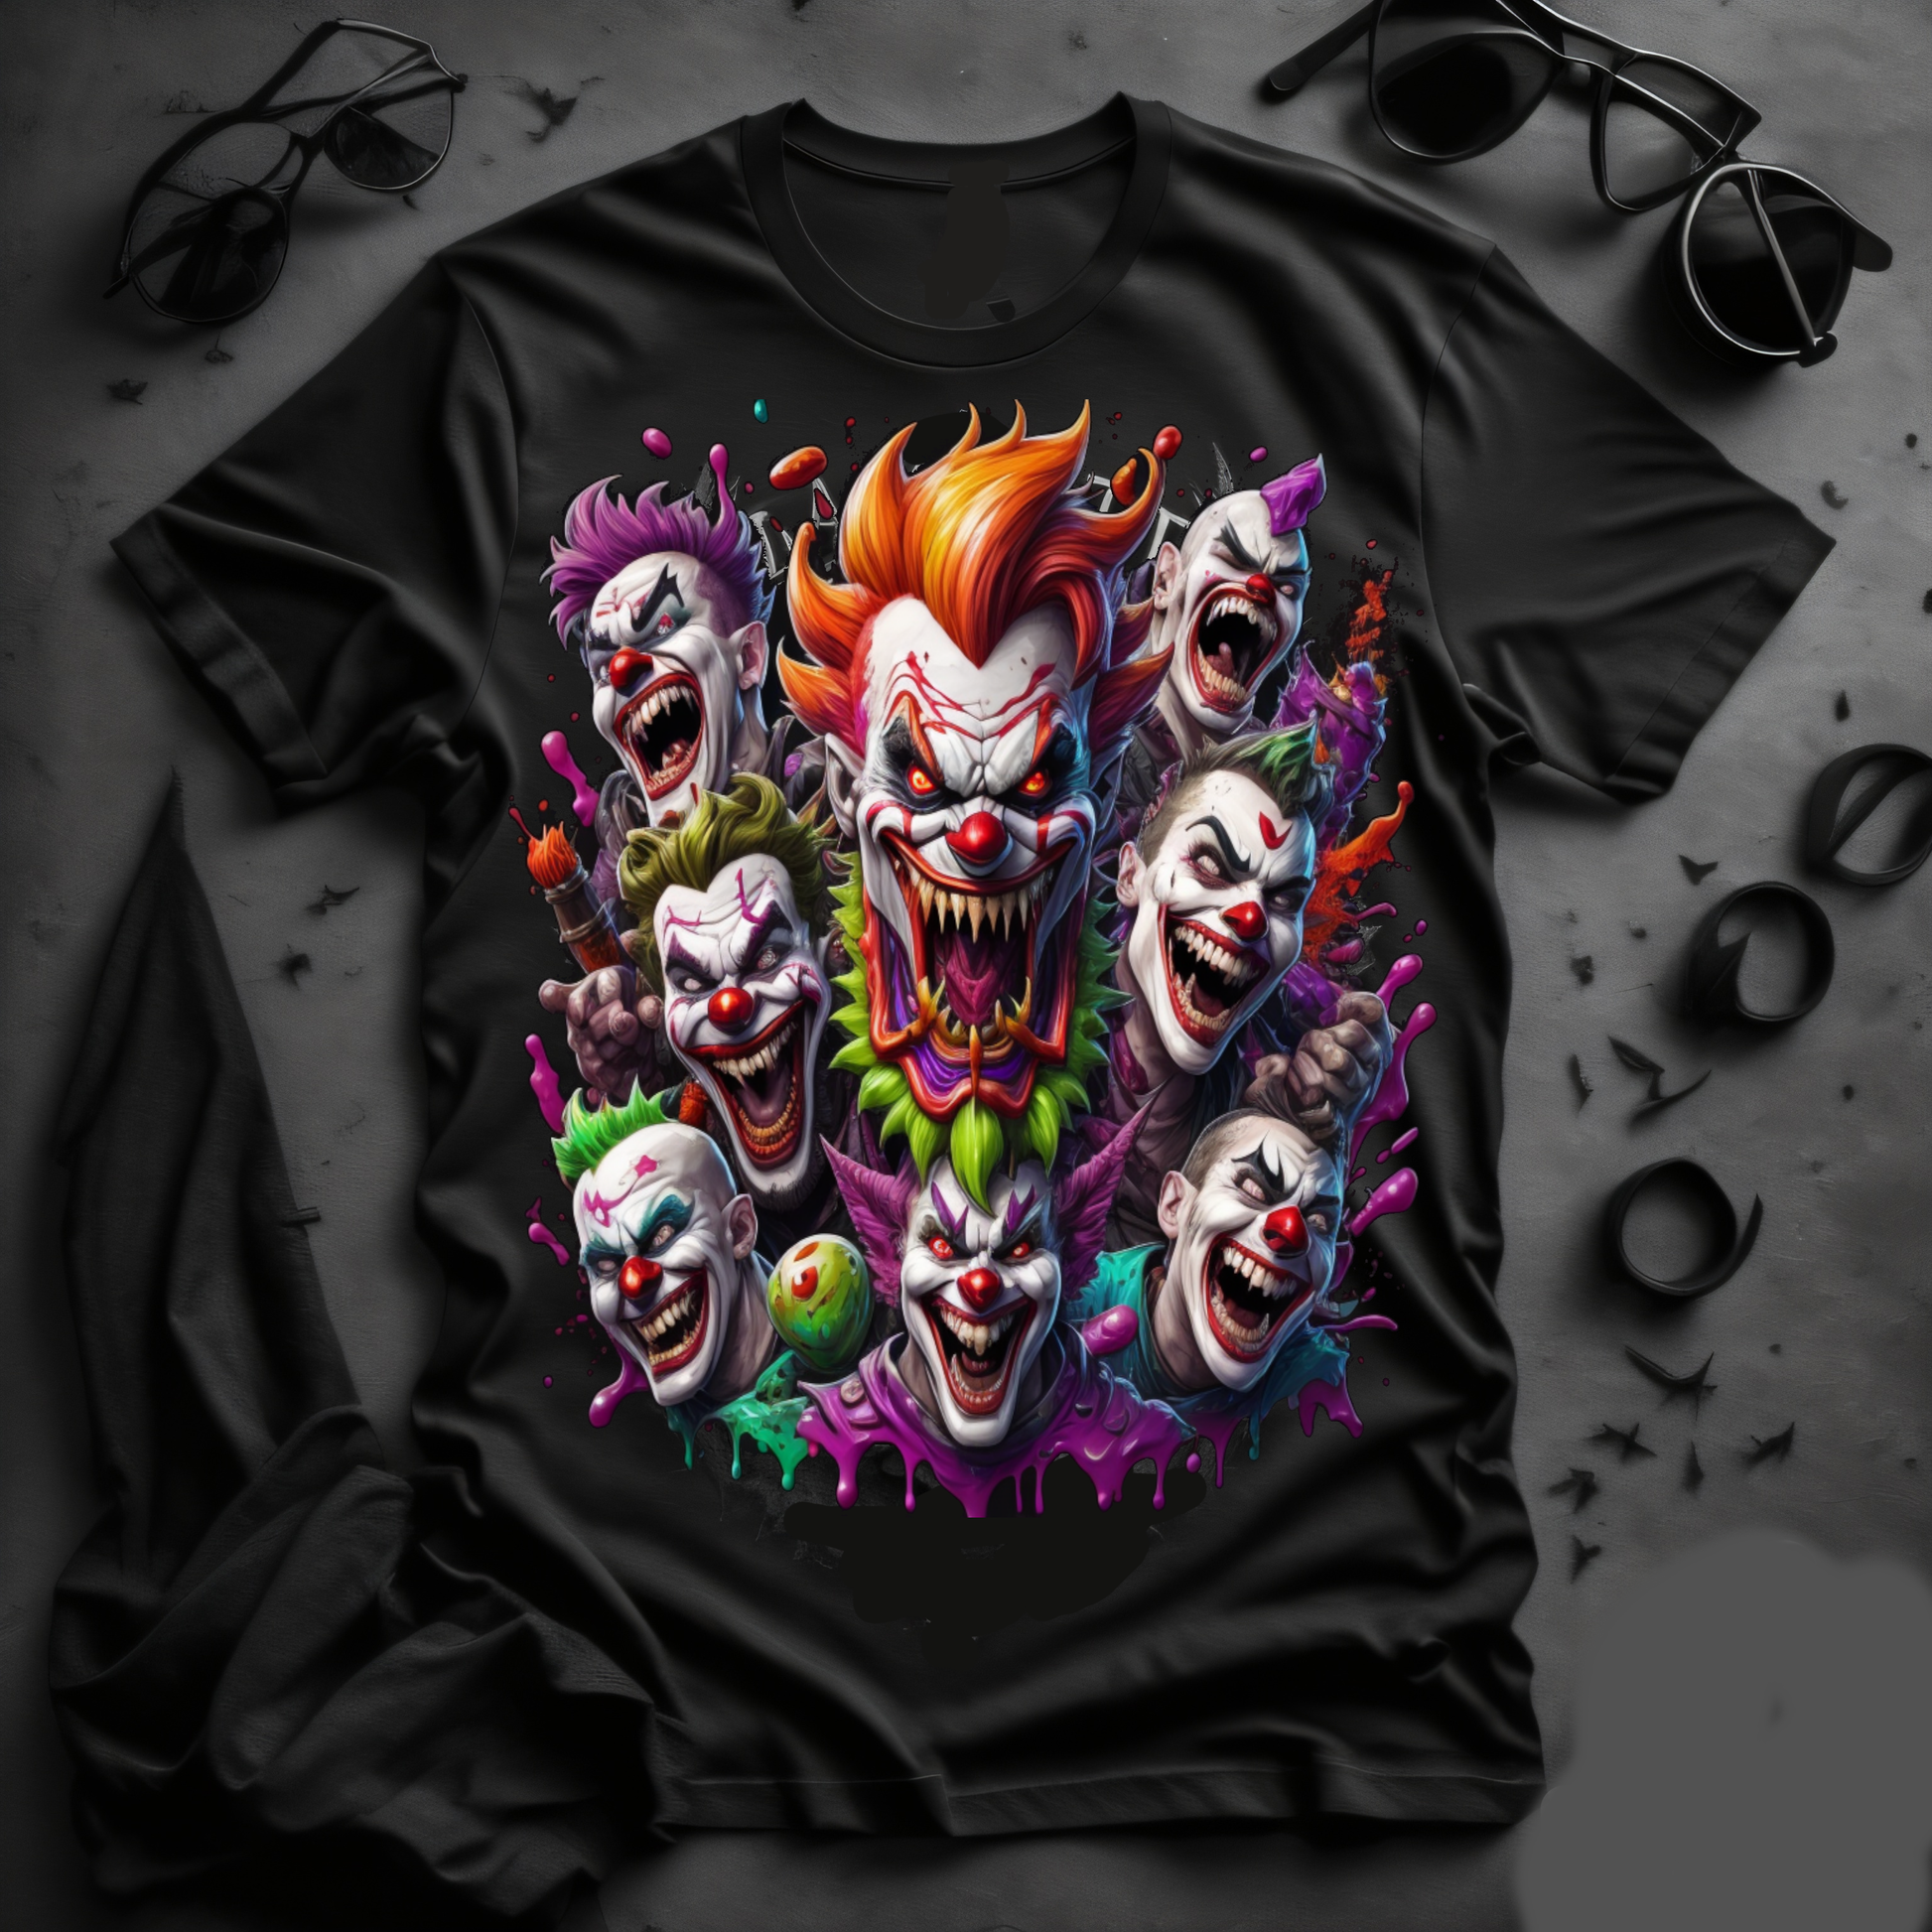 spooky Halloween freaky clown gift idea Men's tee - Premium t-shirt from Lees Krazy Teez - Just $19.95! Shop now at Lees Krazy Teez